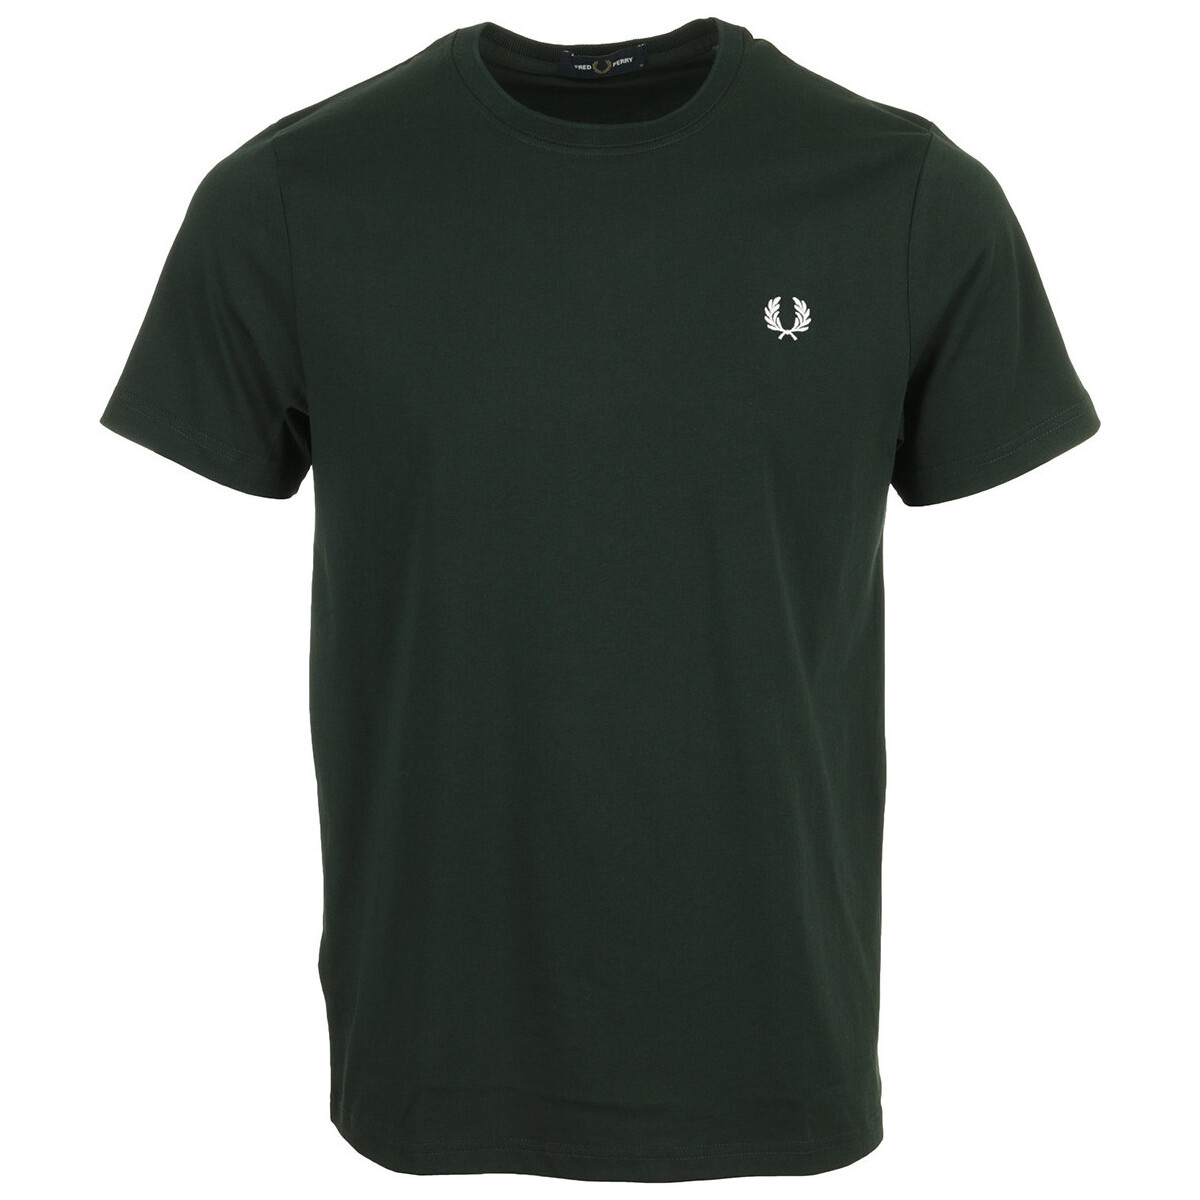 Vêtements Homme T-shirts manches courtes Fred Perry Crew Neck T-Shirt Vert